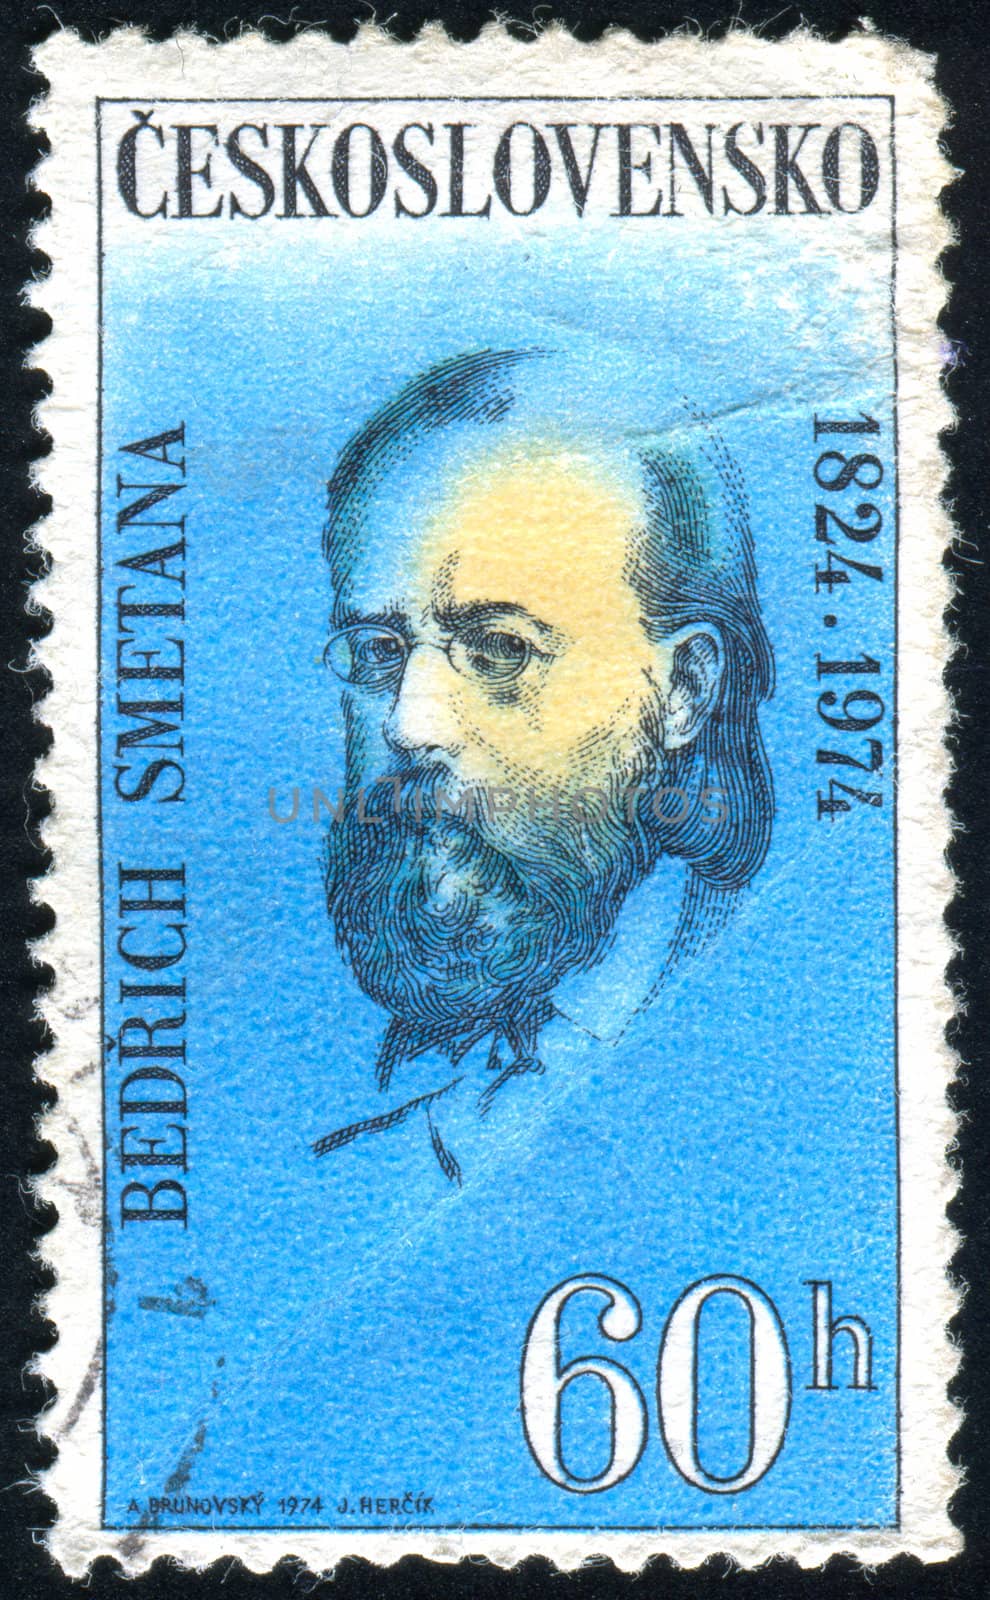 CZECHOSLOVAKIA - CIRCA 1974: stamp printed by Czechoslovakia, shows Bedrich Smetana, circa 1974